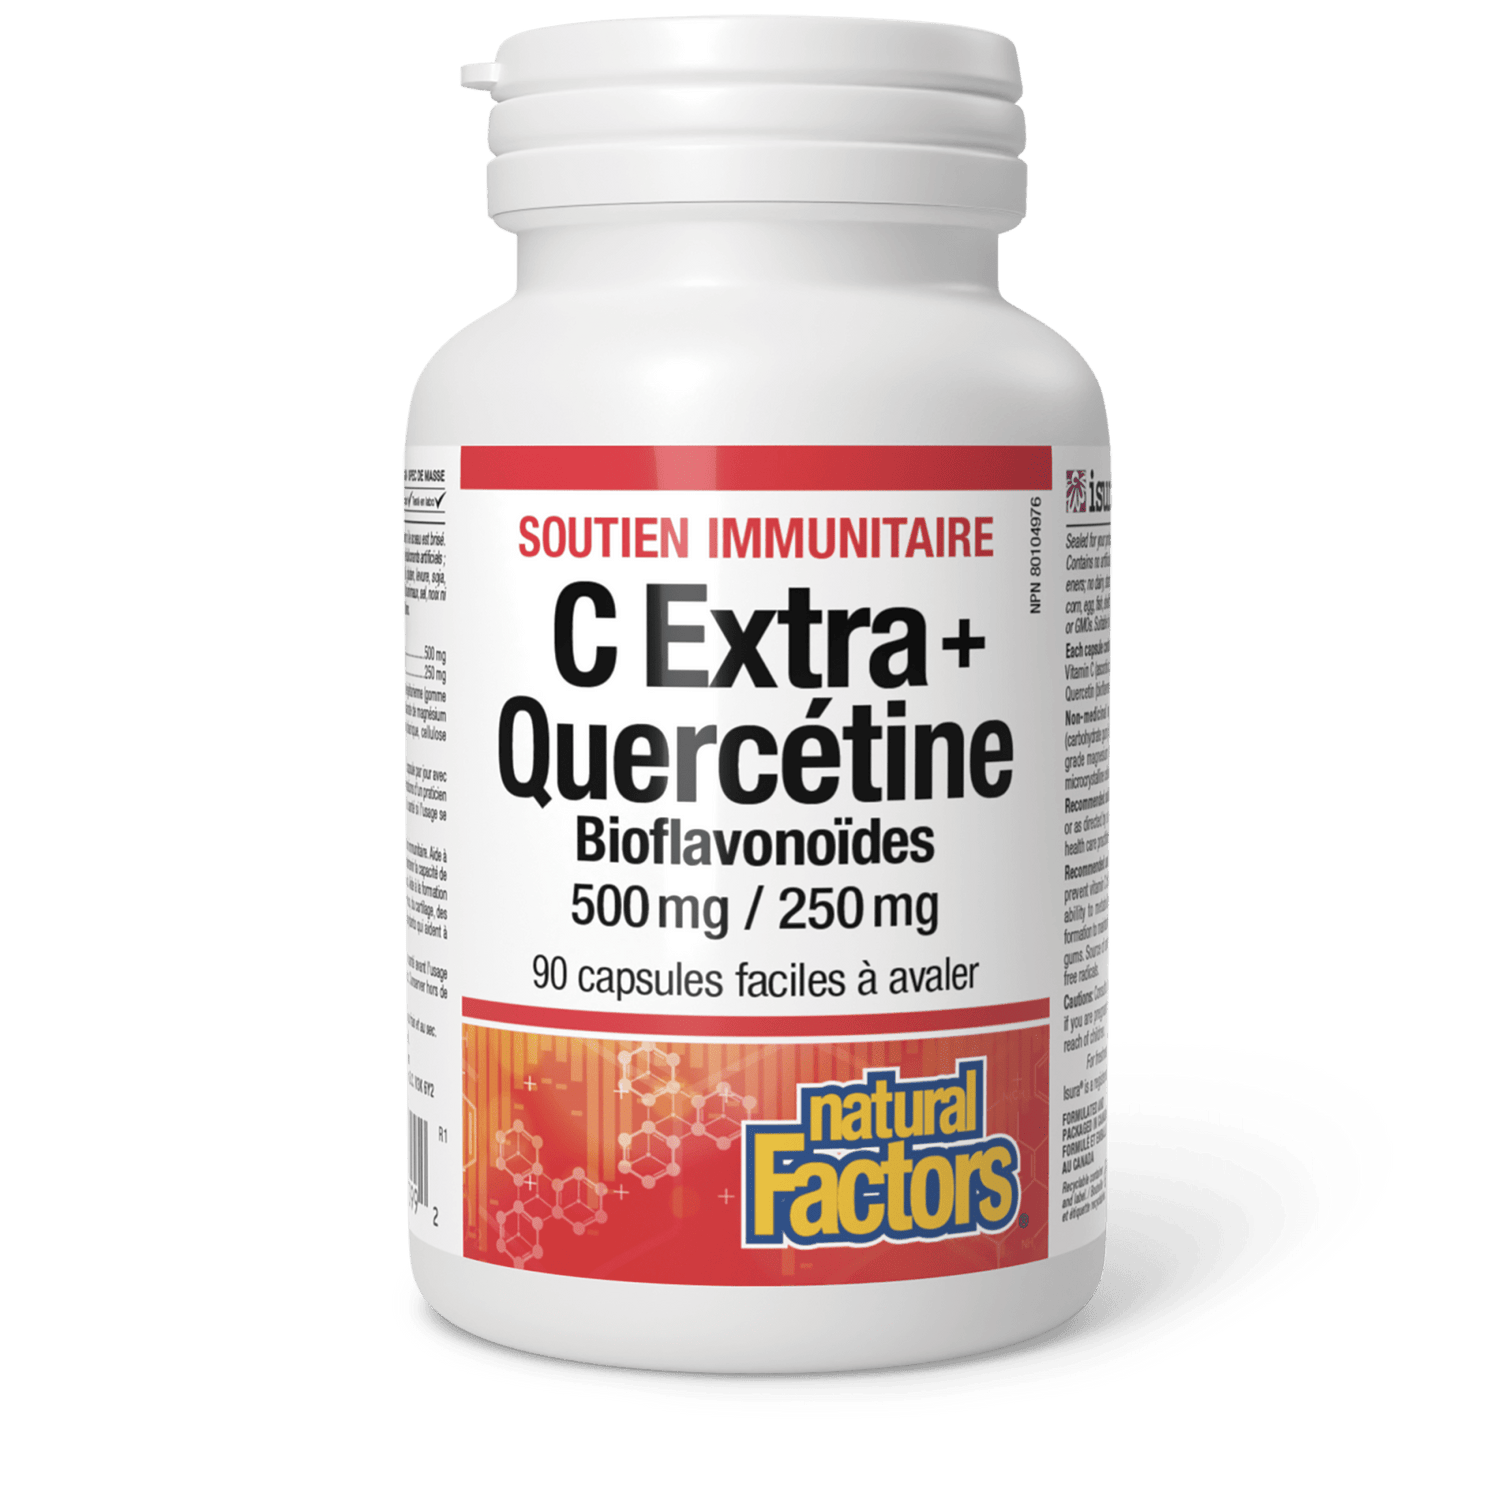 C Extra+ Quercétine Bioflavonoïdes 500 mg/250 mg, Natural Factors|v|image|1399